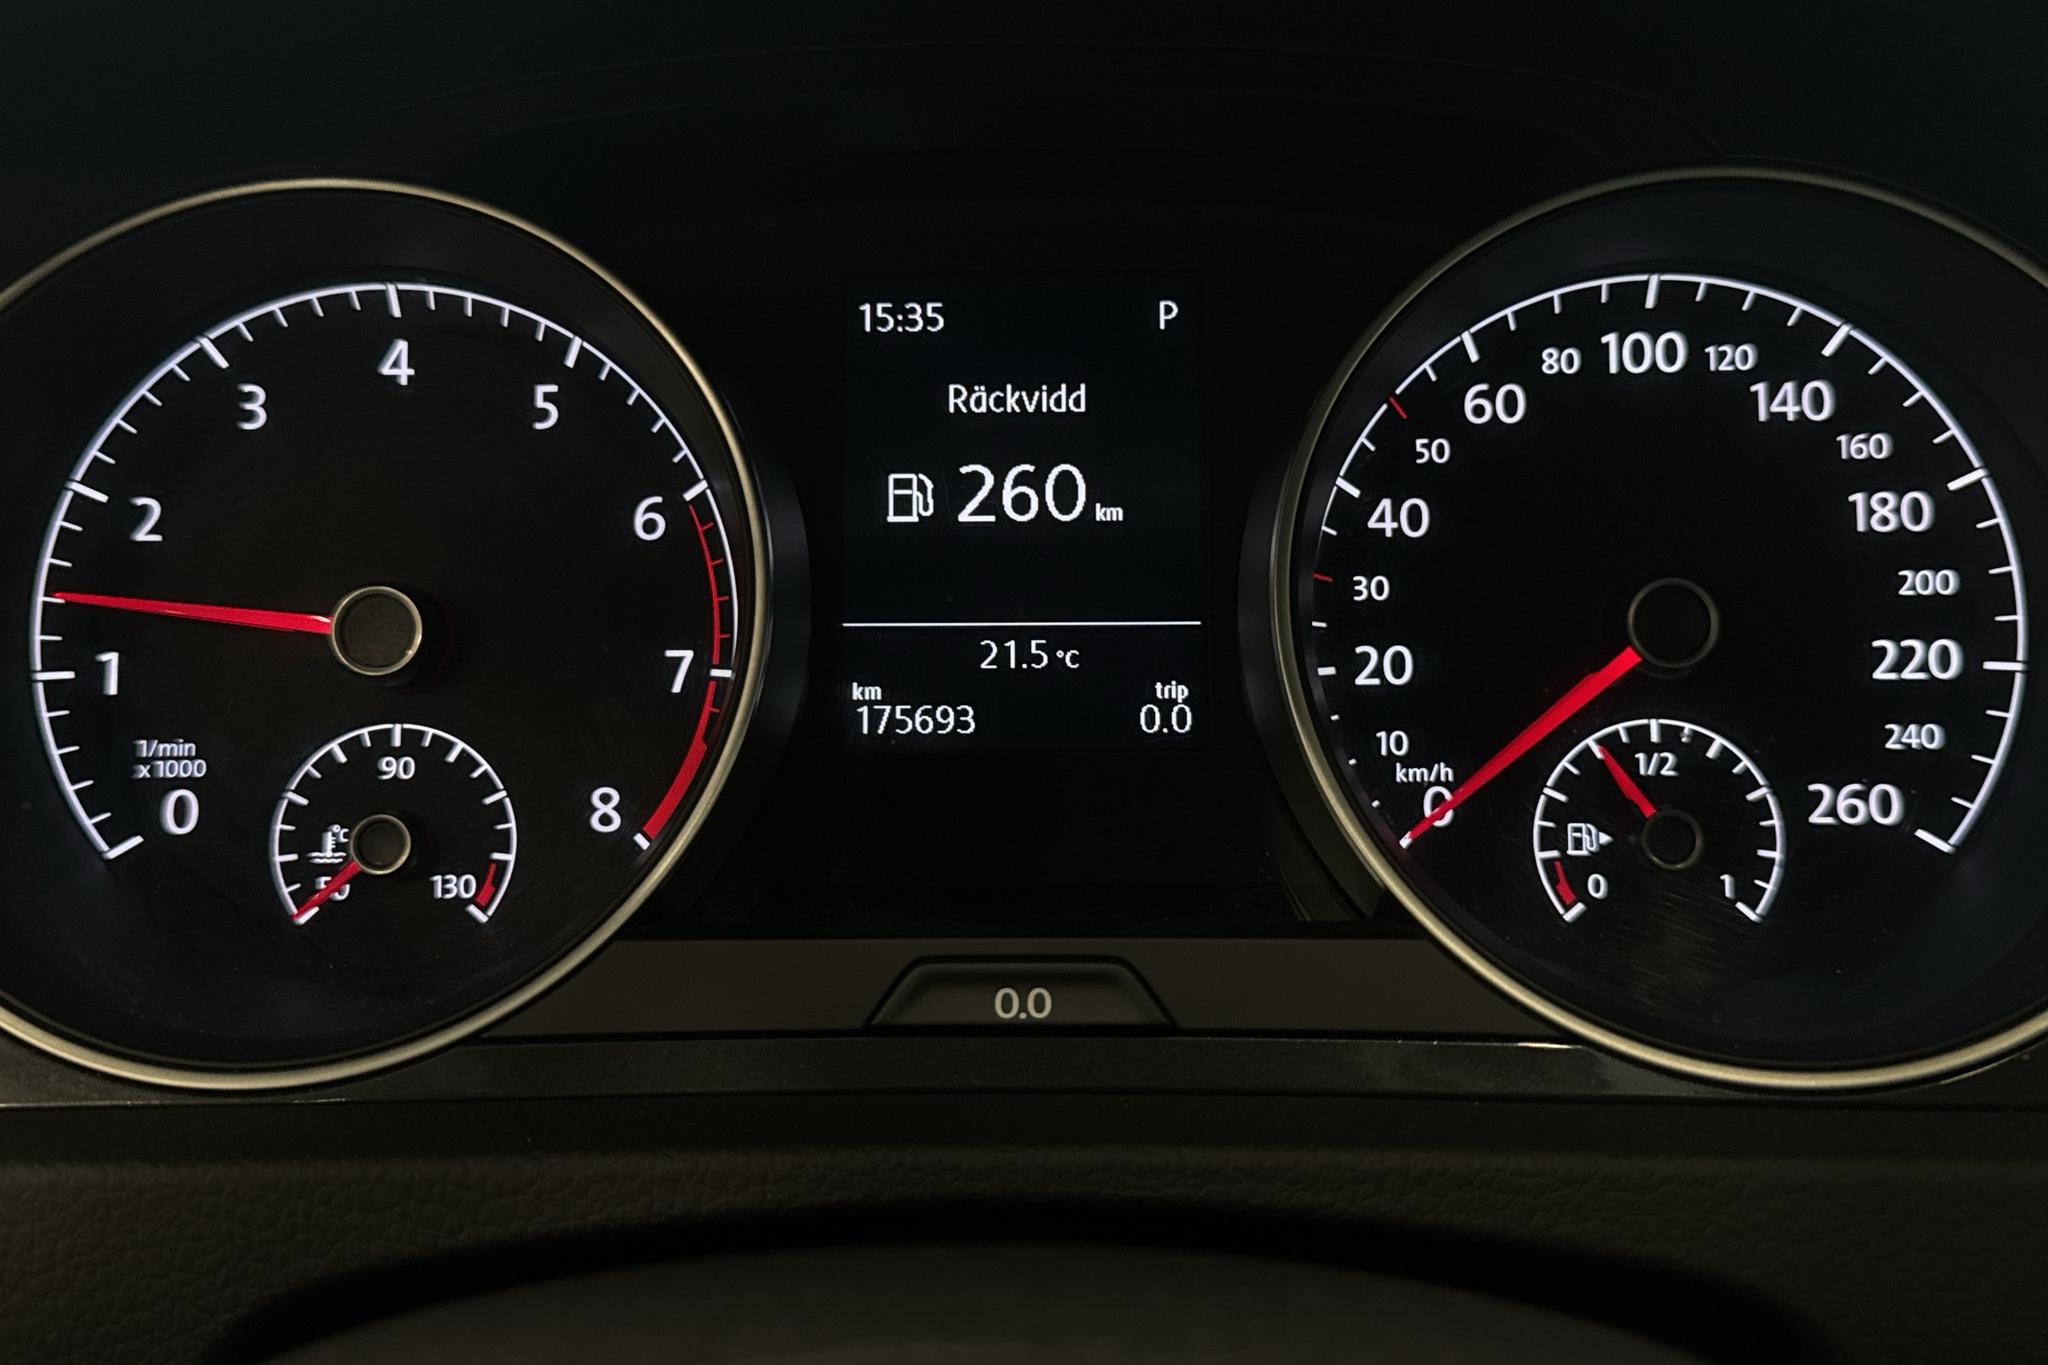 VW Golf VII 1.0 TSI 5dr (115hk) - 17 569 mil - Automat - svart - 2019